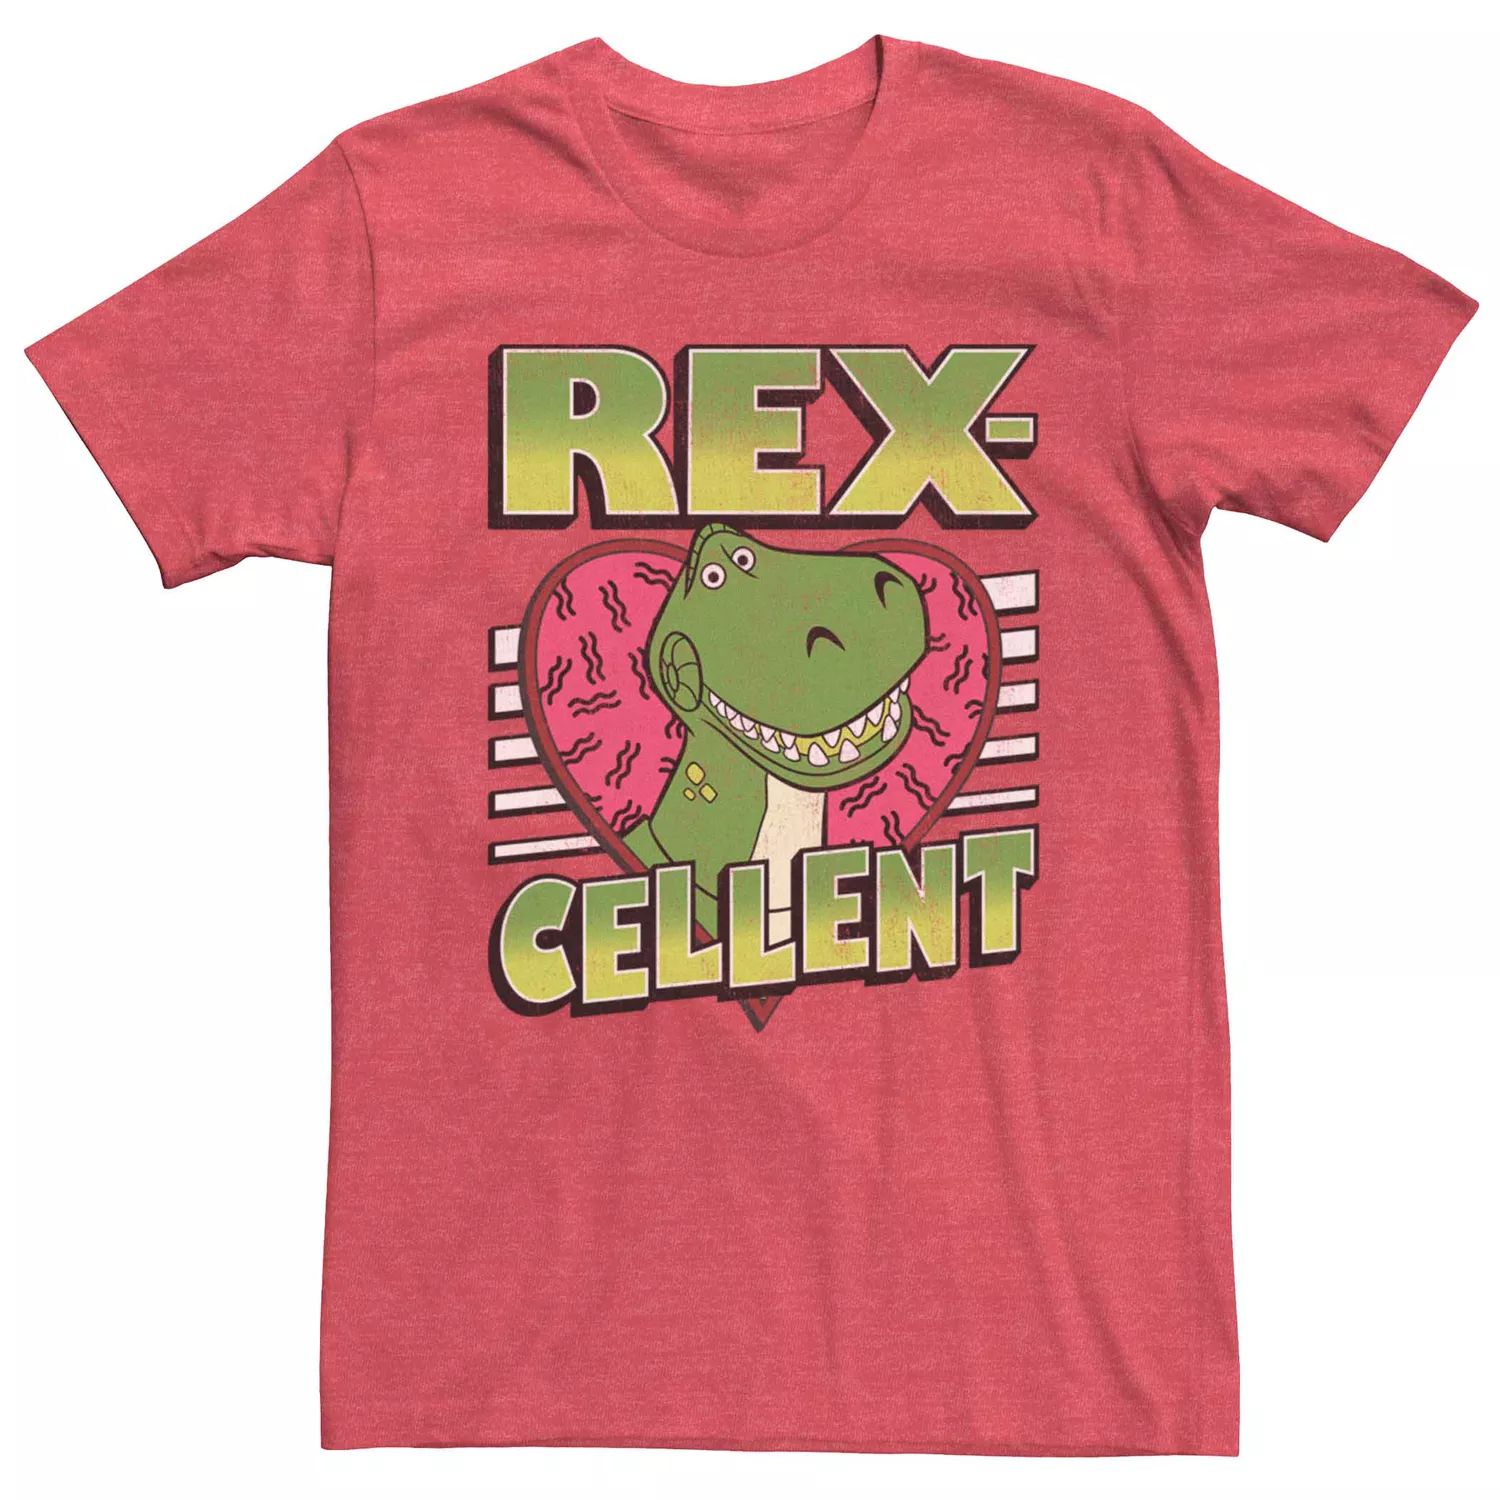 мужская футболка disney pixar toy story rex face licensed character Мужская футболка с рисунком в форме сердца Disney Pixar Toy Story Rex-Cellent Heart Licensed Character